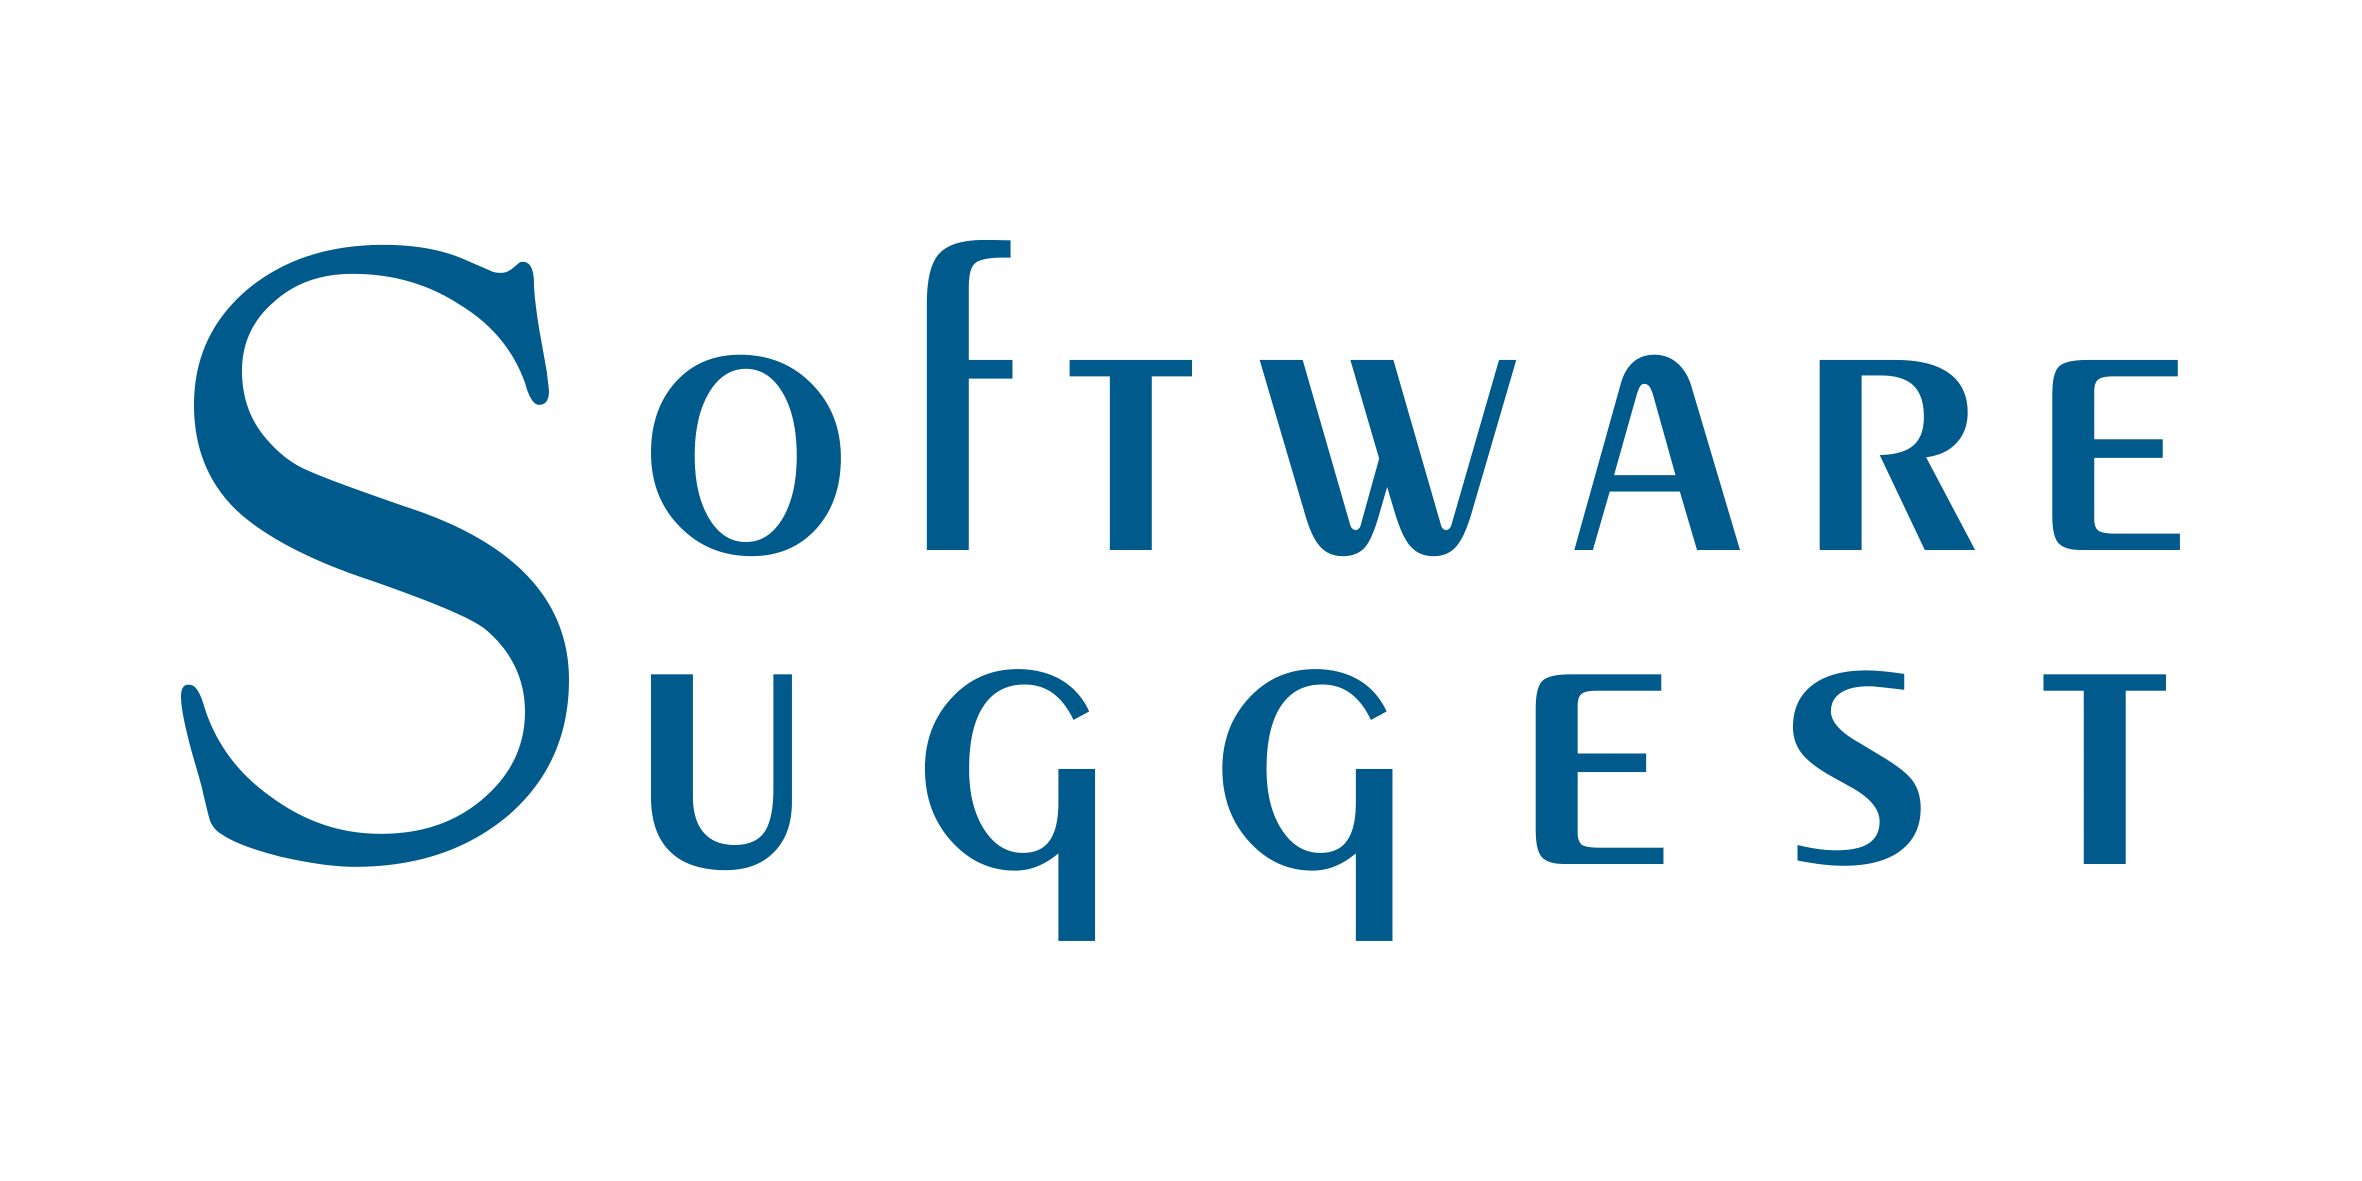 Software Suggest logo